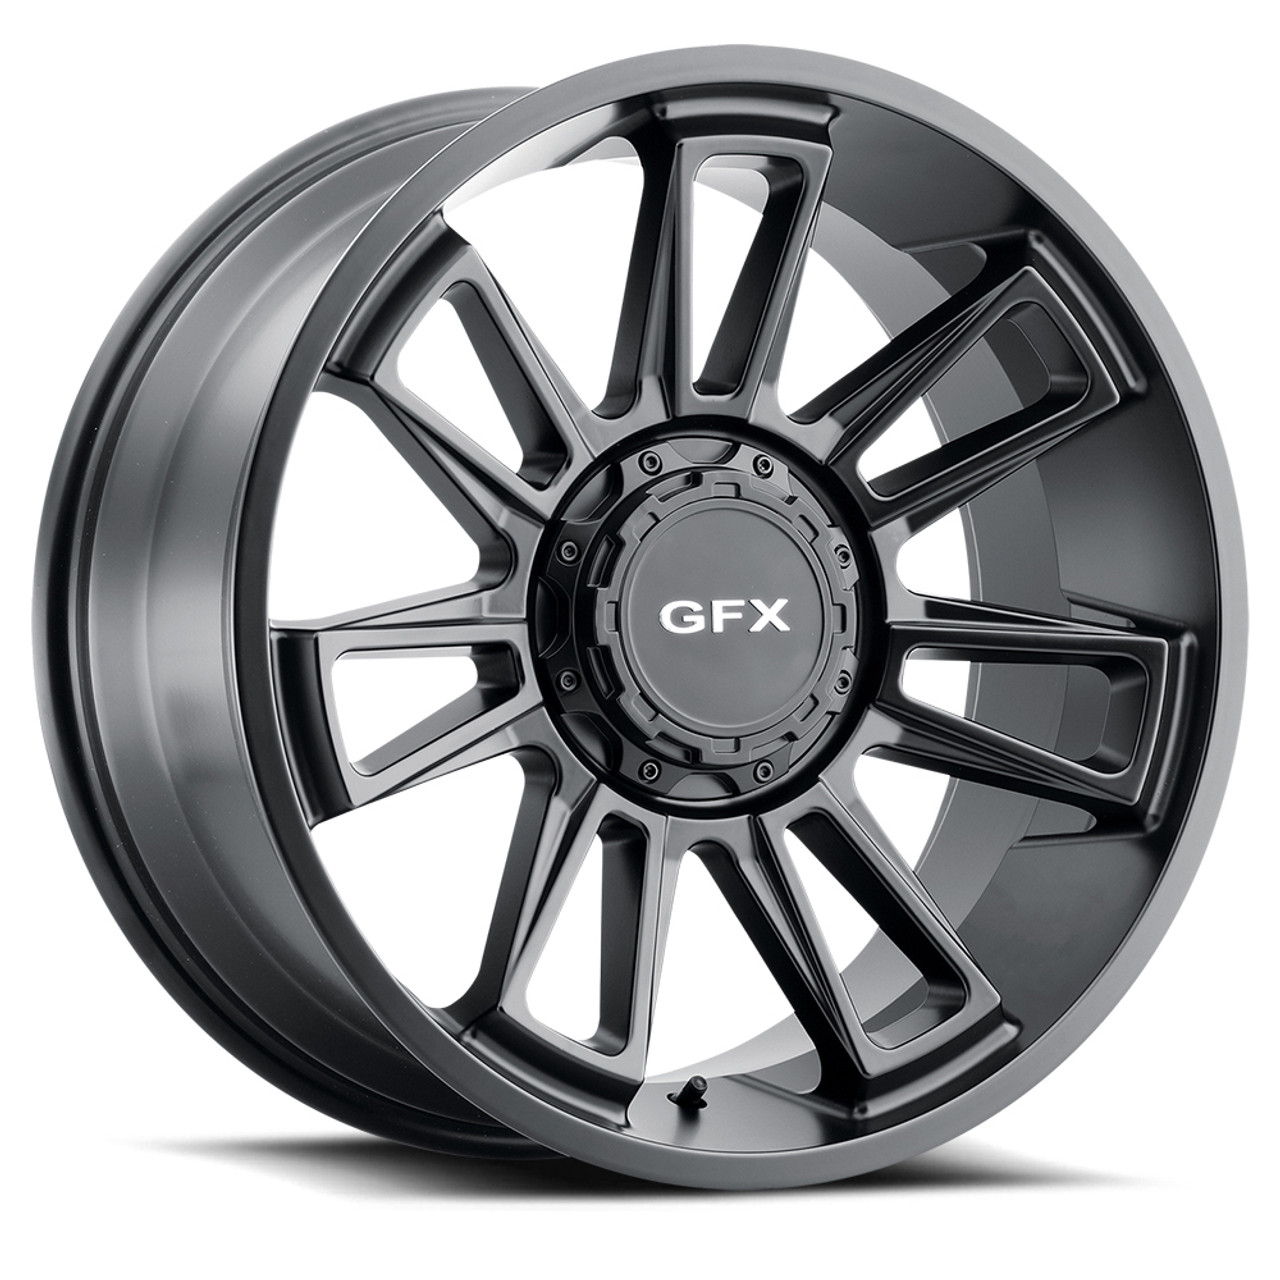 Set 4 20" Voxx G-FX TR21 Matte Black Wheels 20x10 8x6.5 -19mm Rims